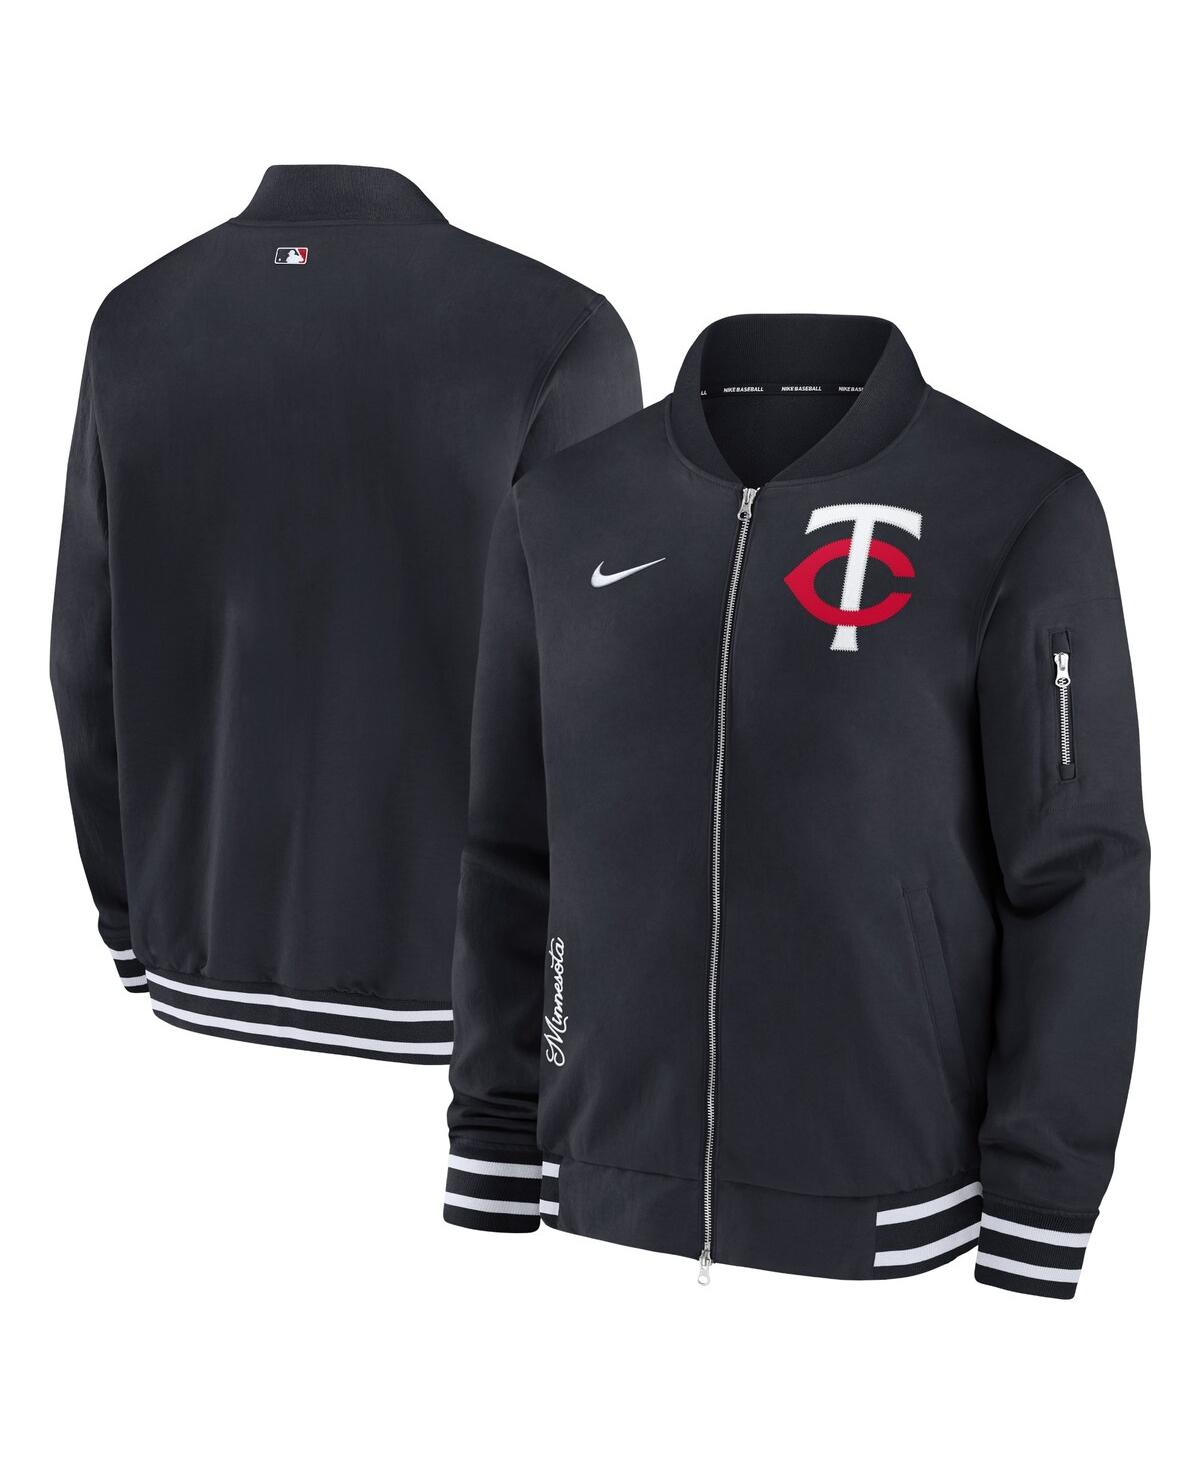 Men's Nike Navy Minnesota Twins Authentic Collection Full-Zip Bomber Jacket - Navy